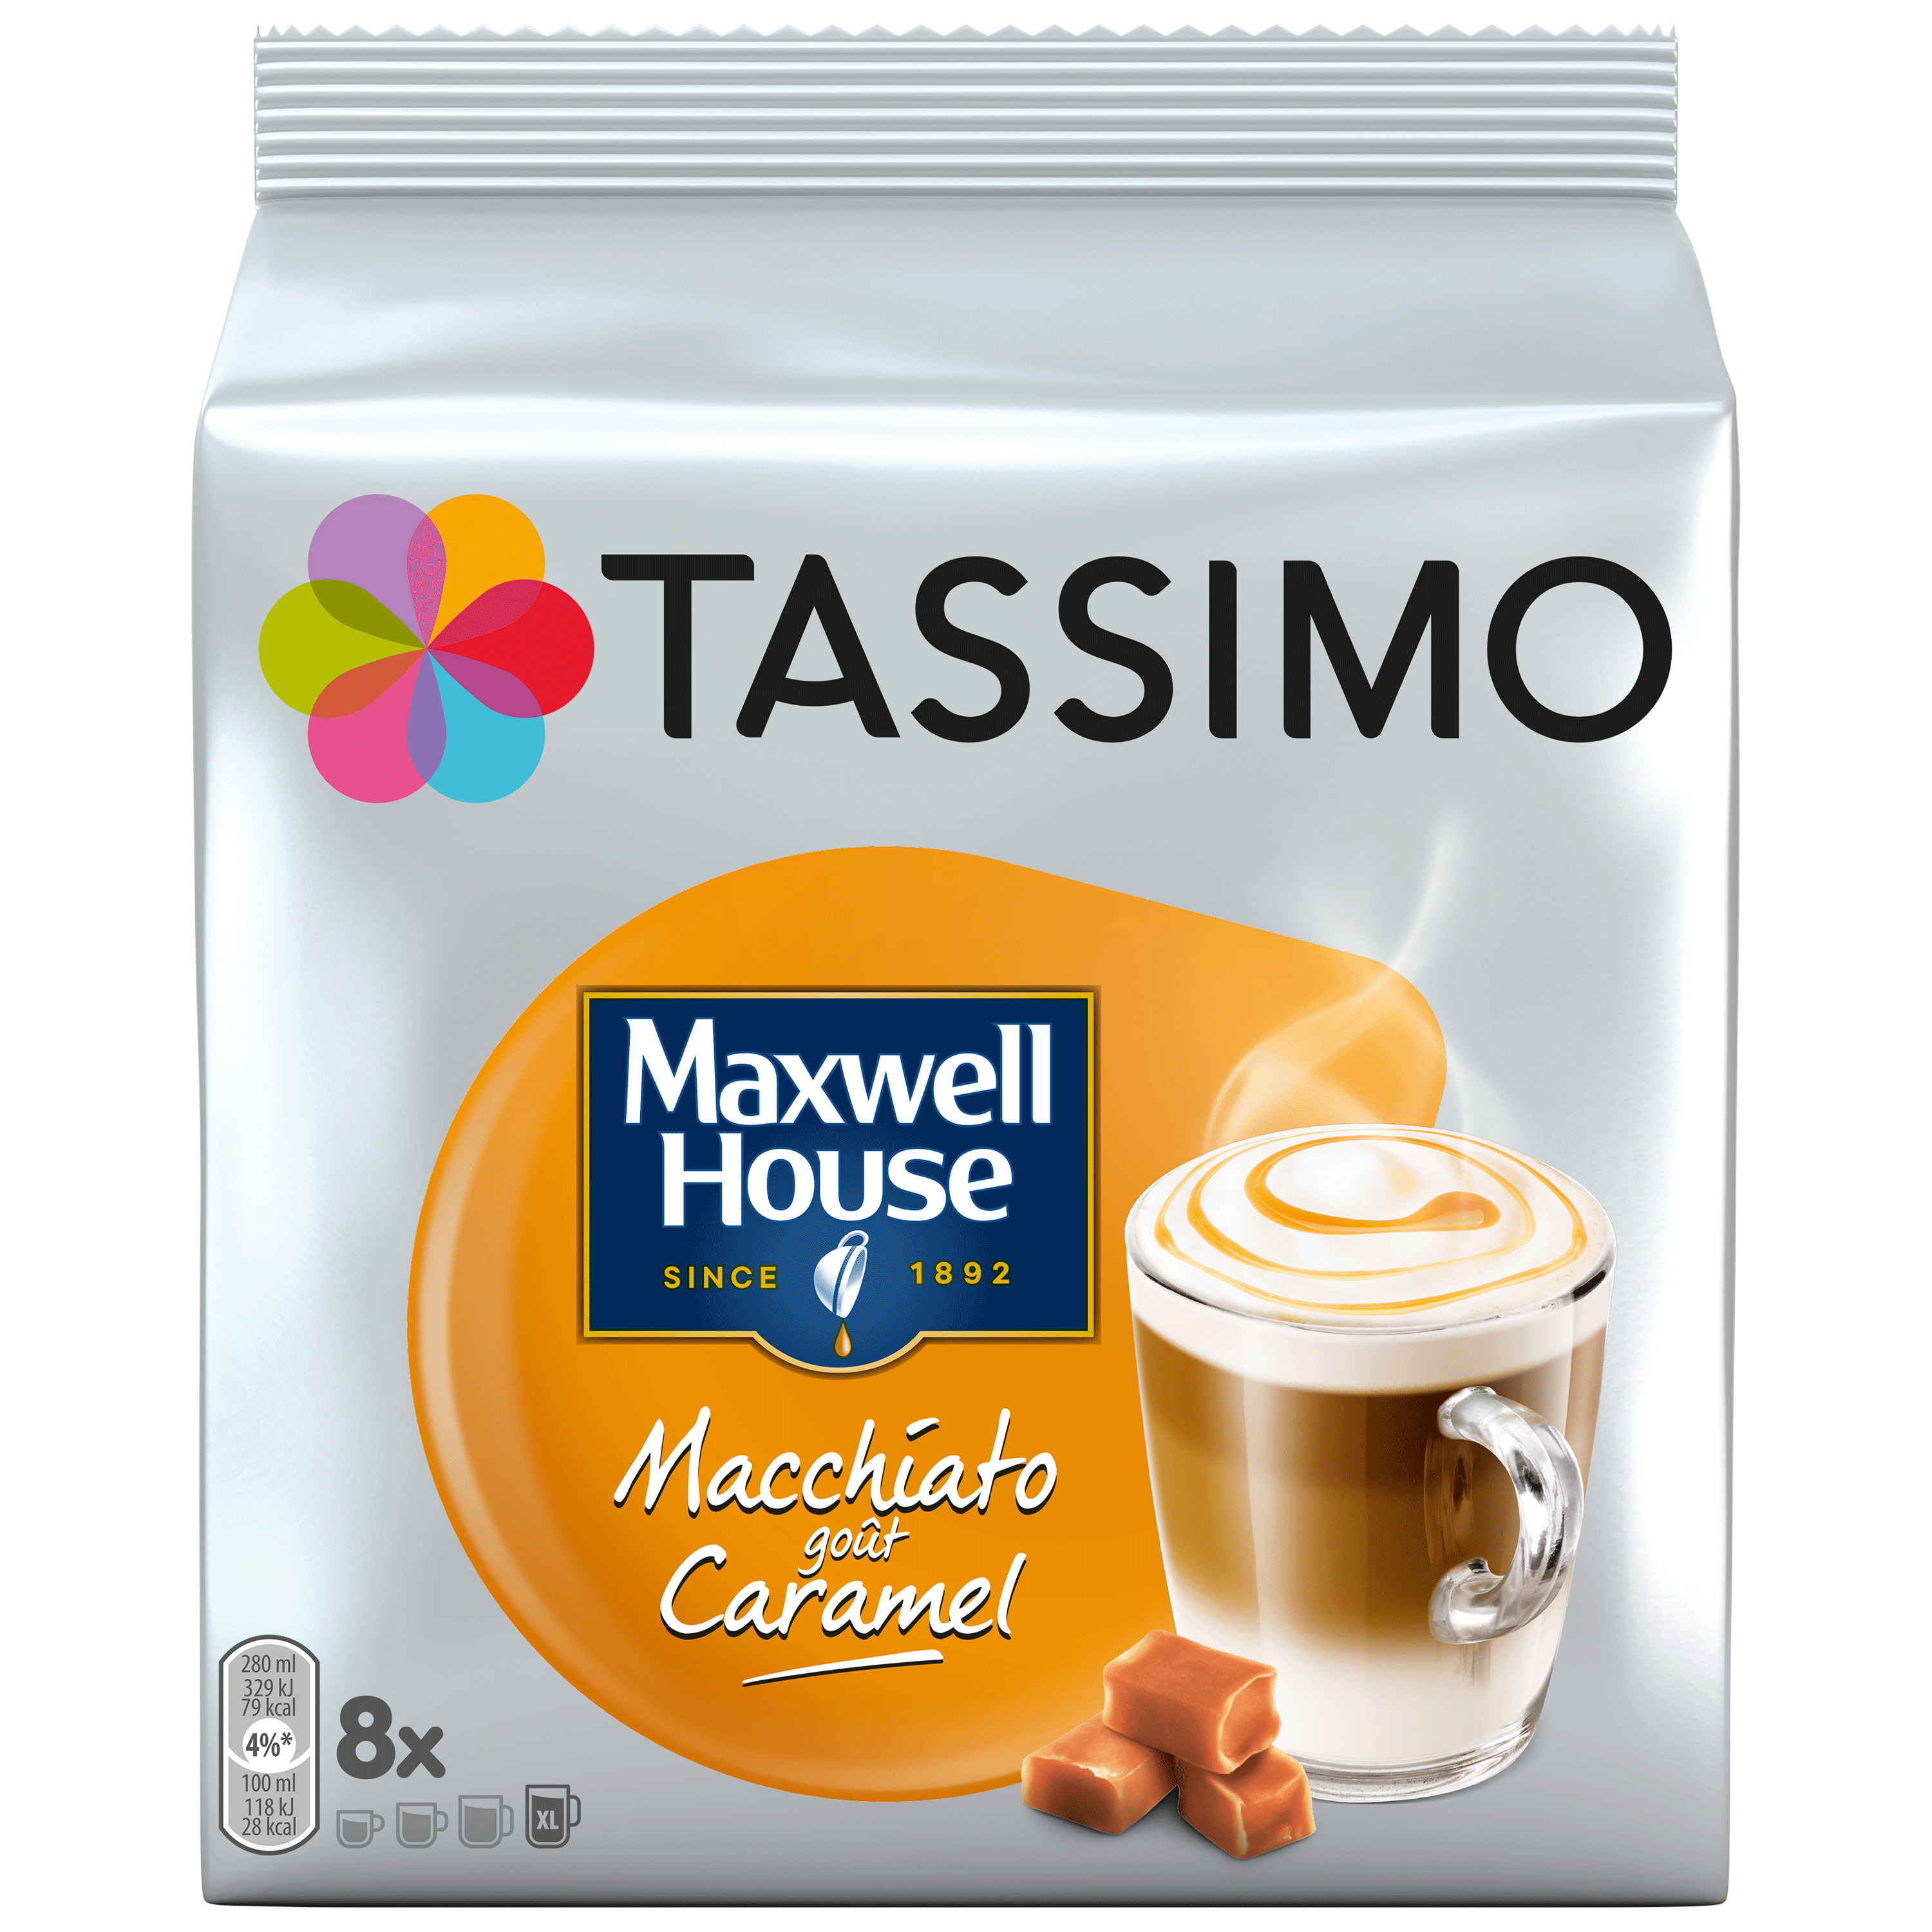 TASSIMO Dosettes de café Maxwell House macchiato goût caramel 8 dosettes  268g pas cher 